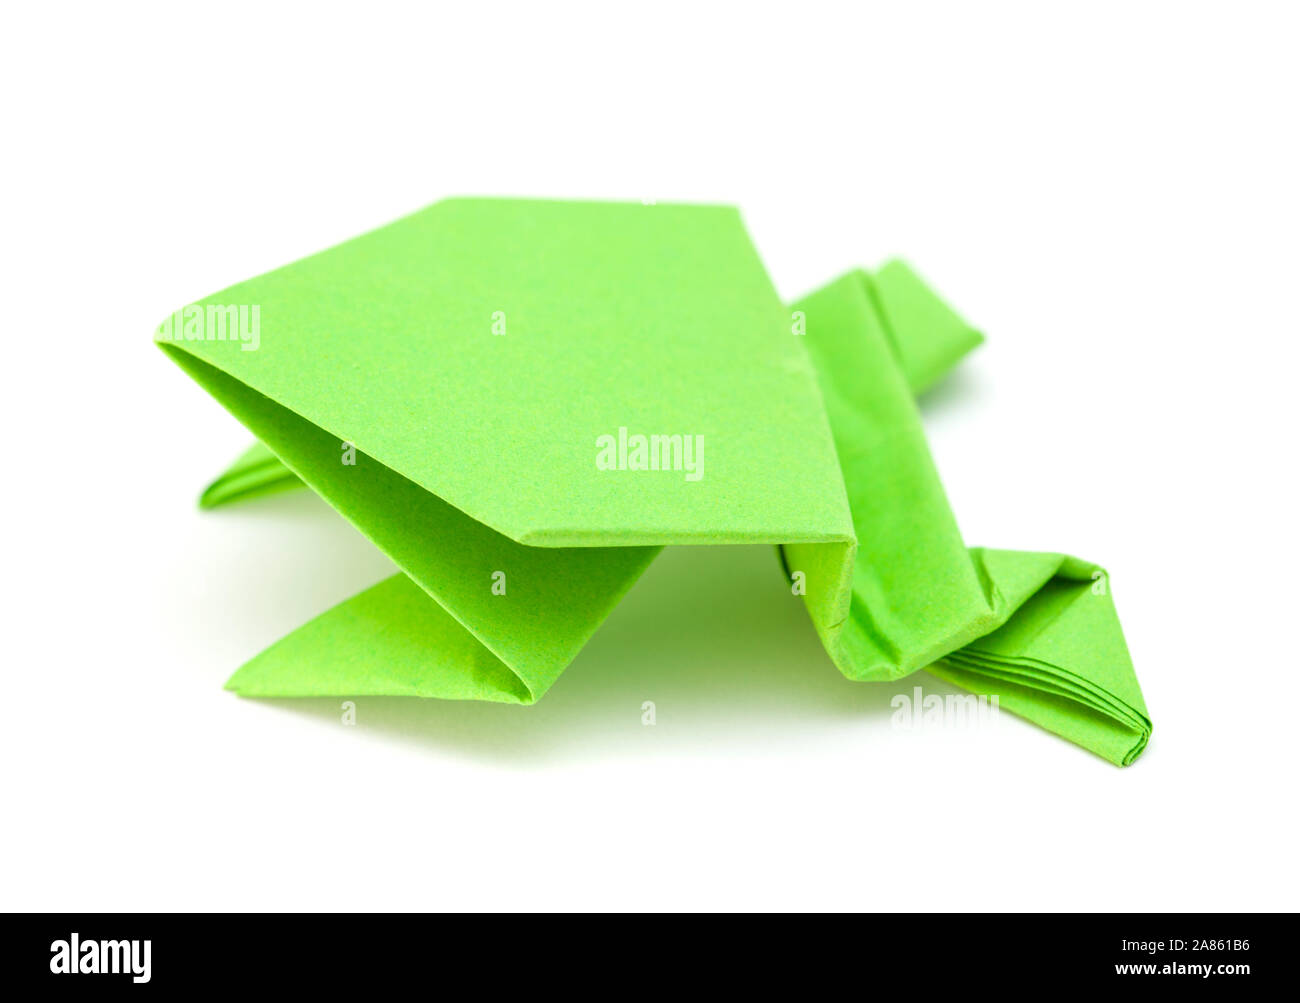 jumping frog origami model isolated on white background Stock Photo